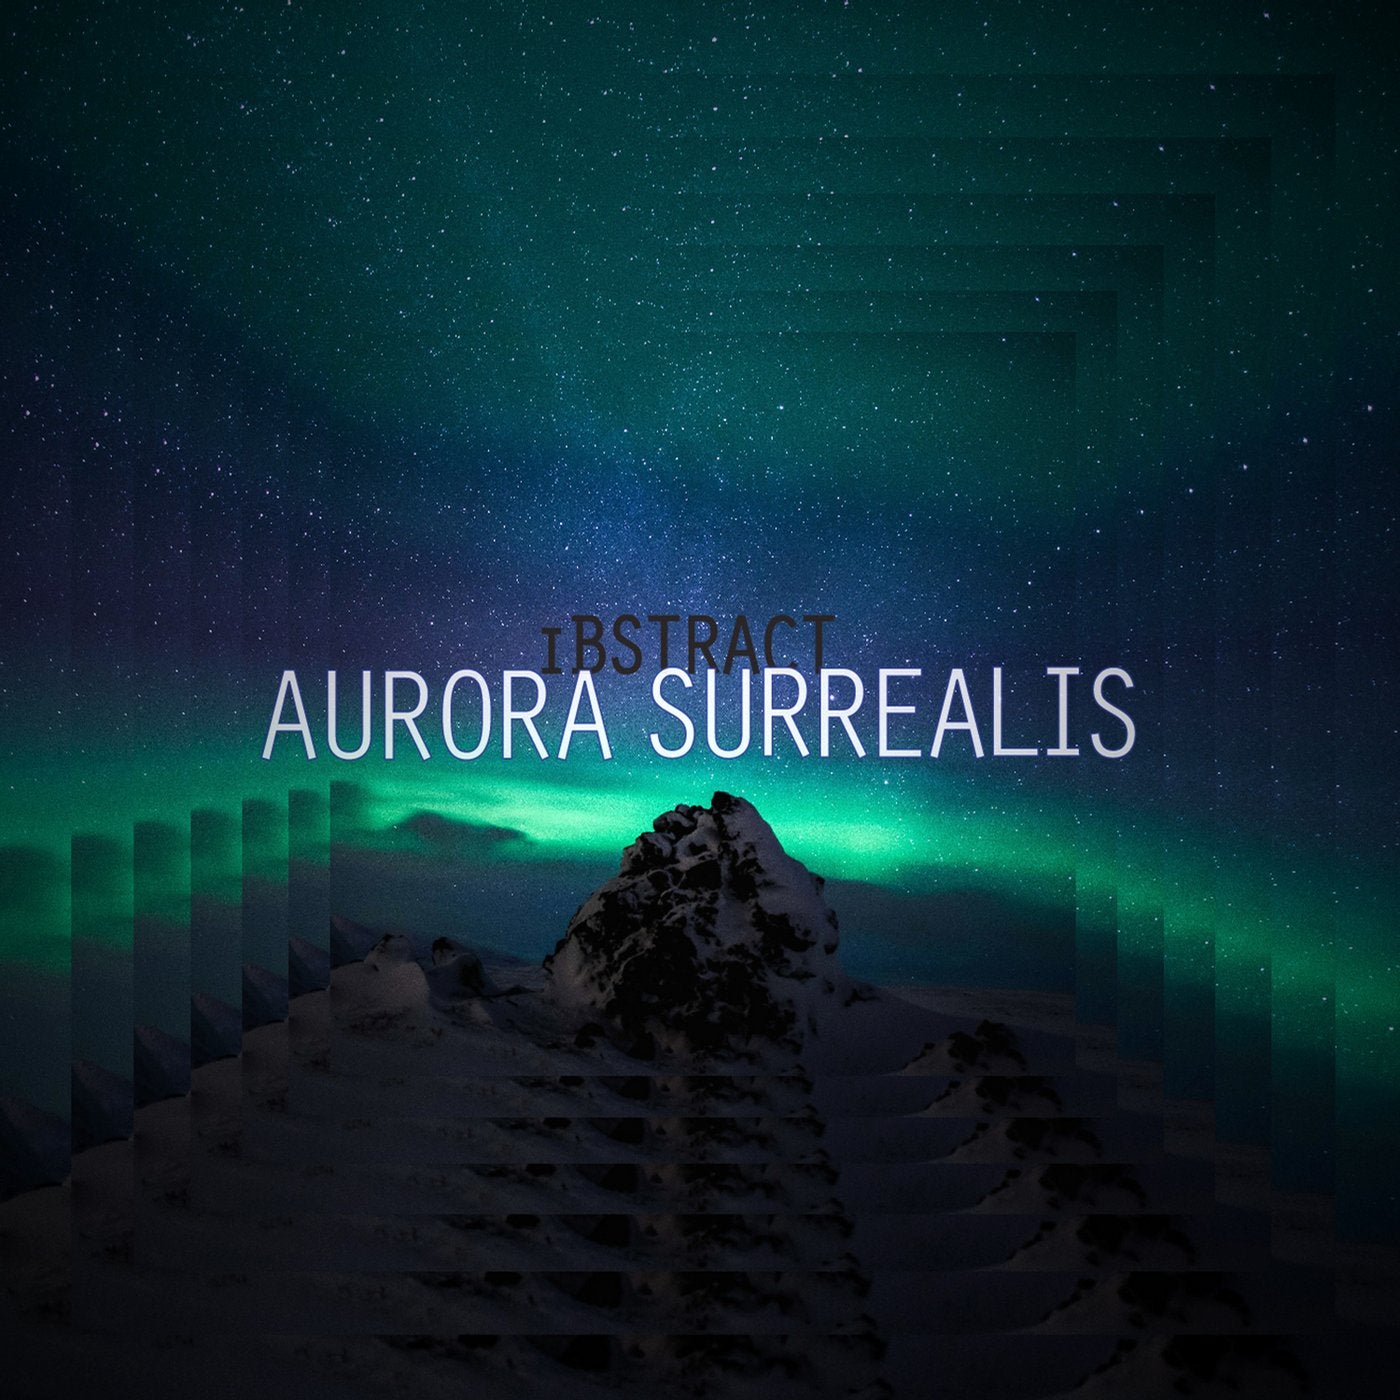 Aurora Surrealis